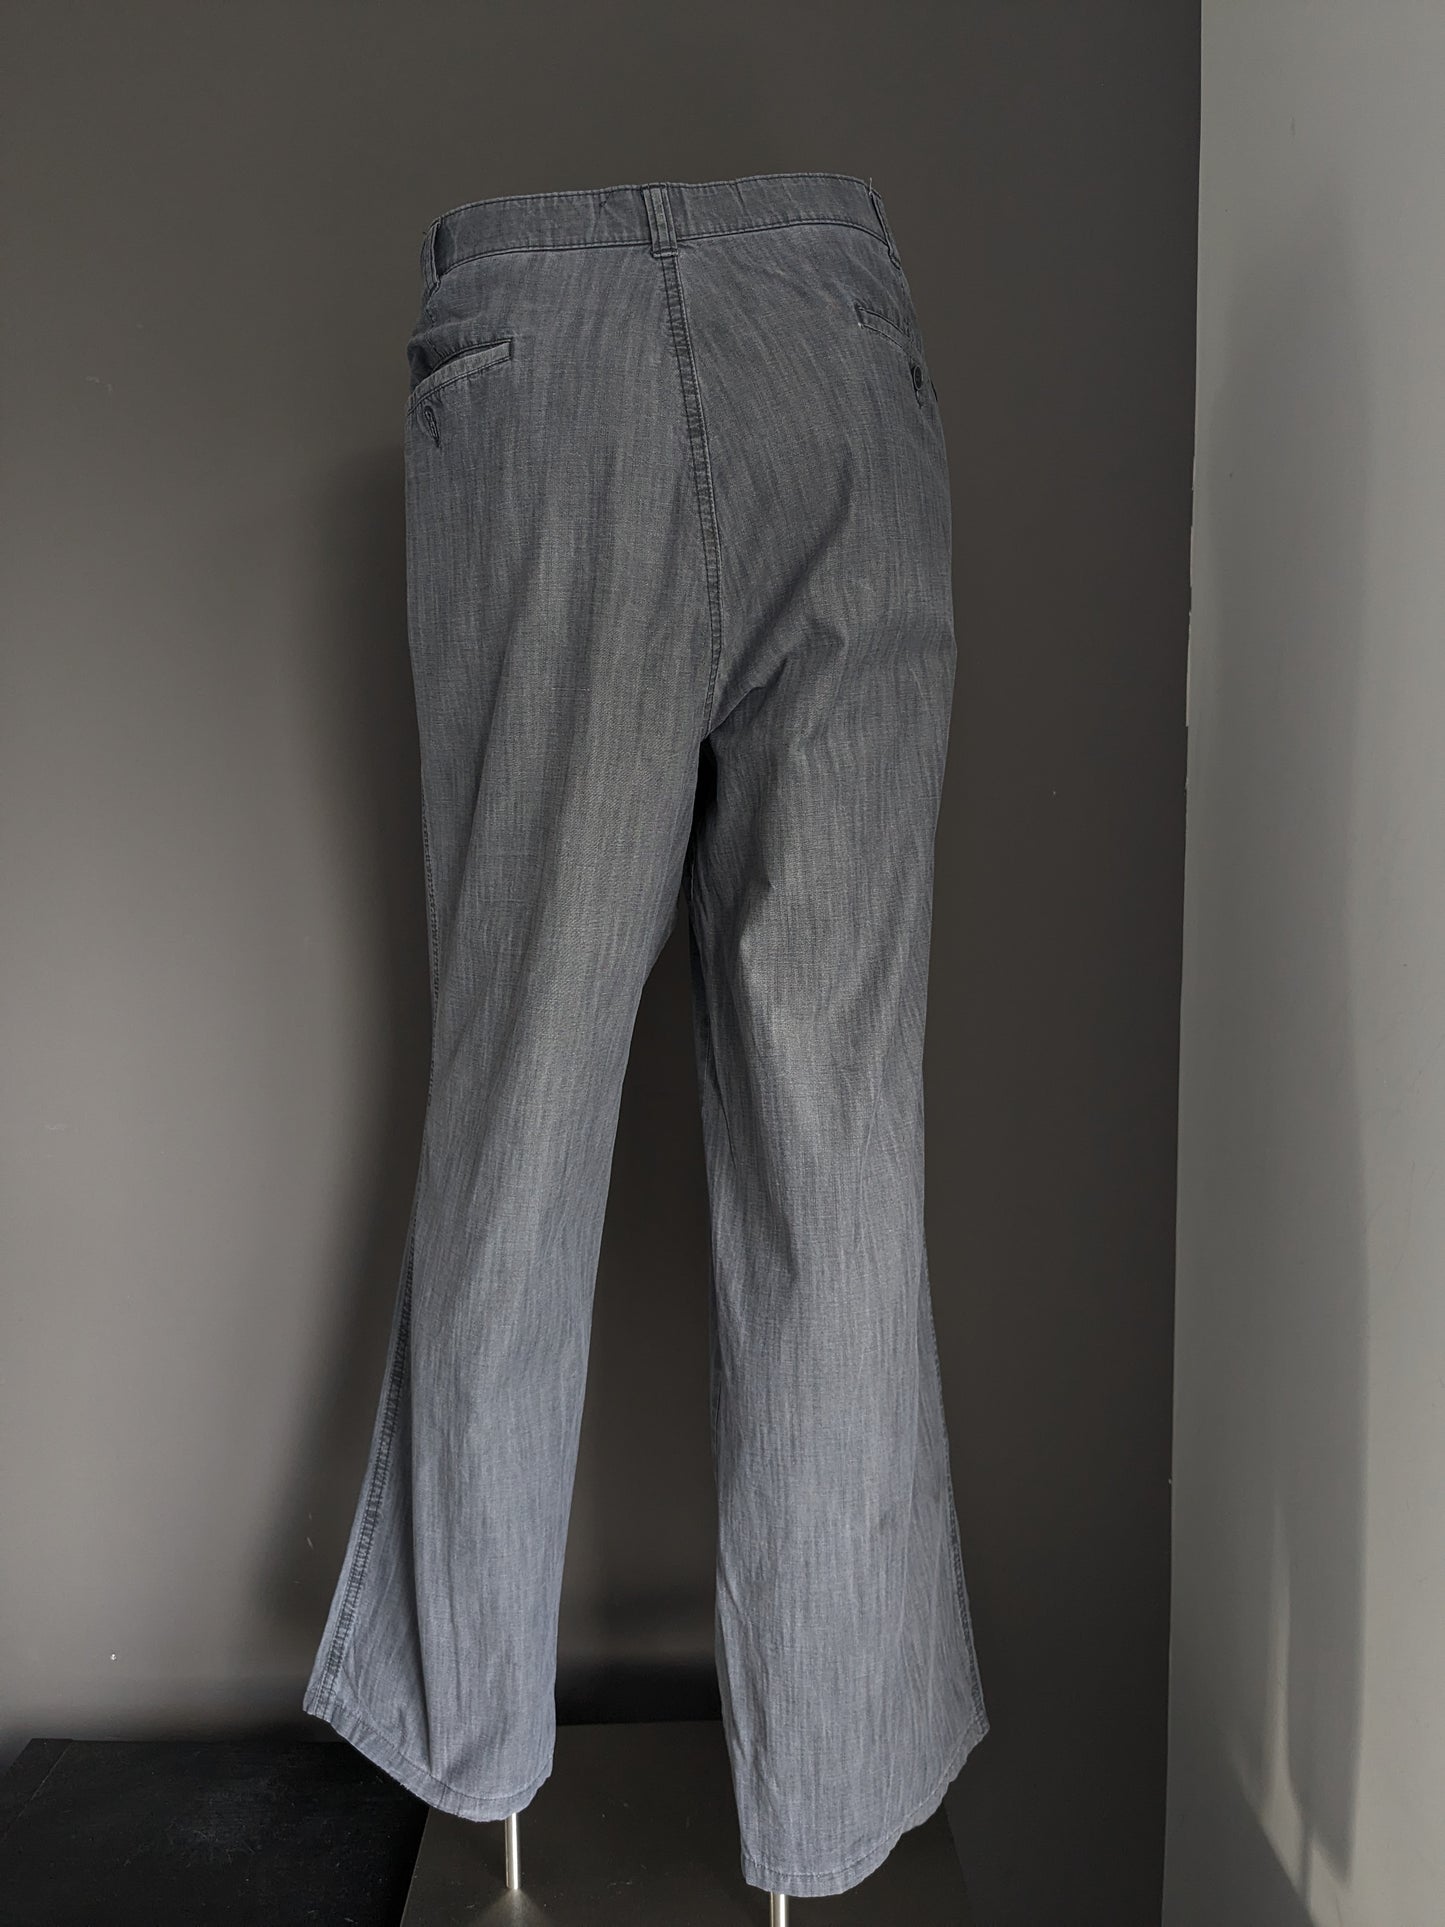 Club o pantalones / pantalones de confort. Motivo gris. Tamaño 29 (58 / 2xl / xxl)